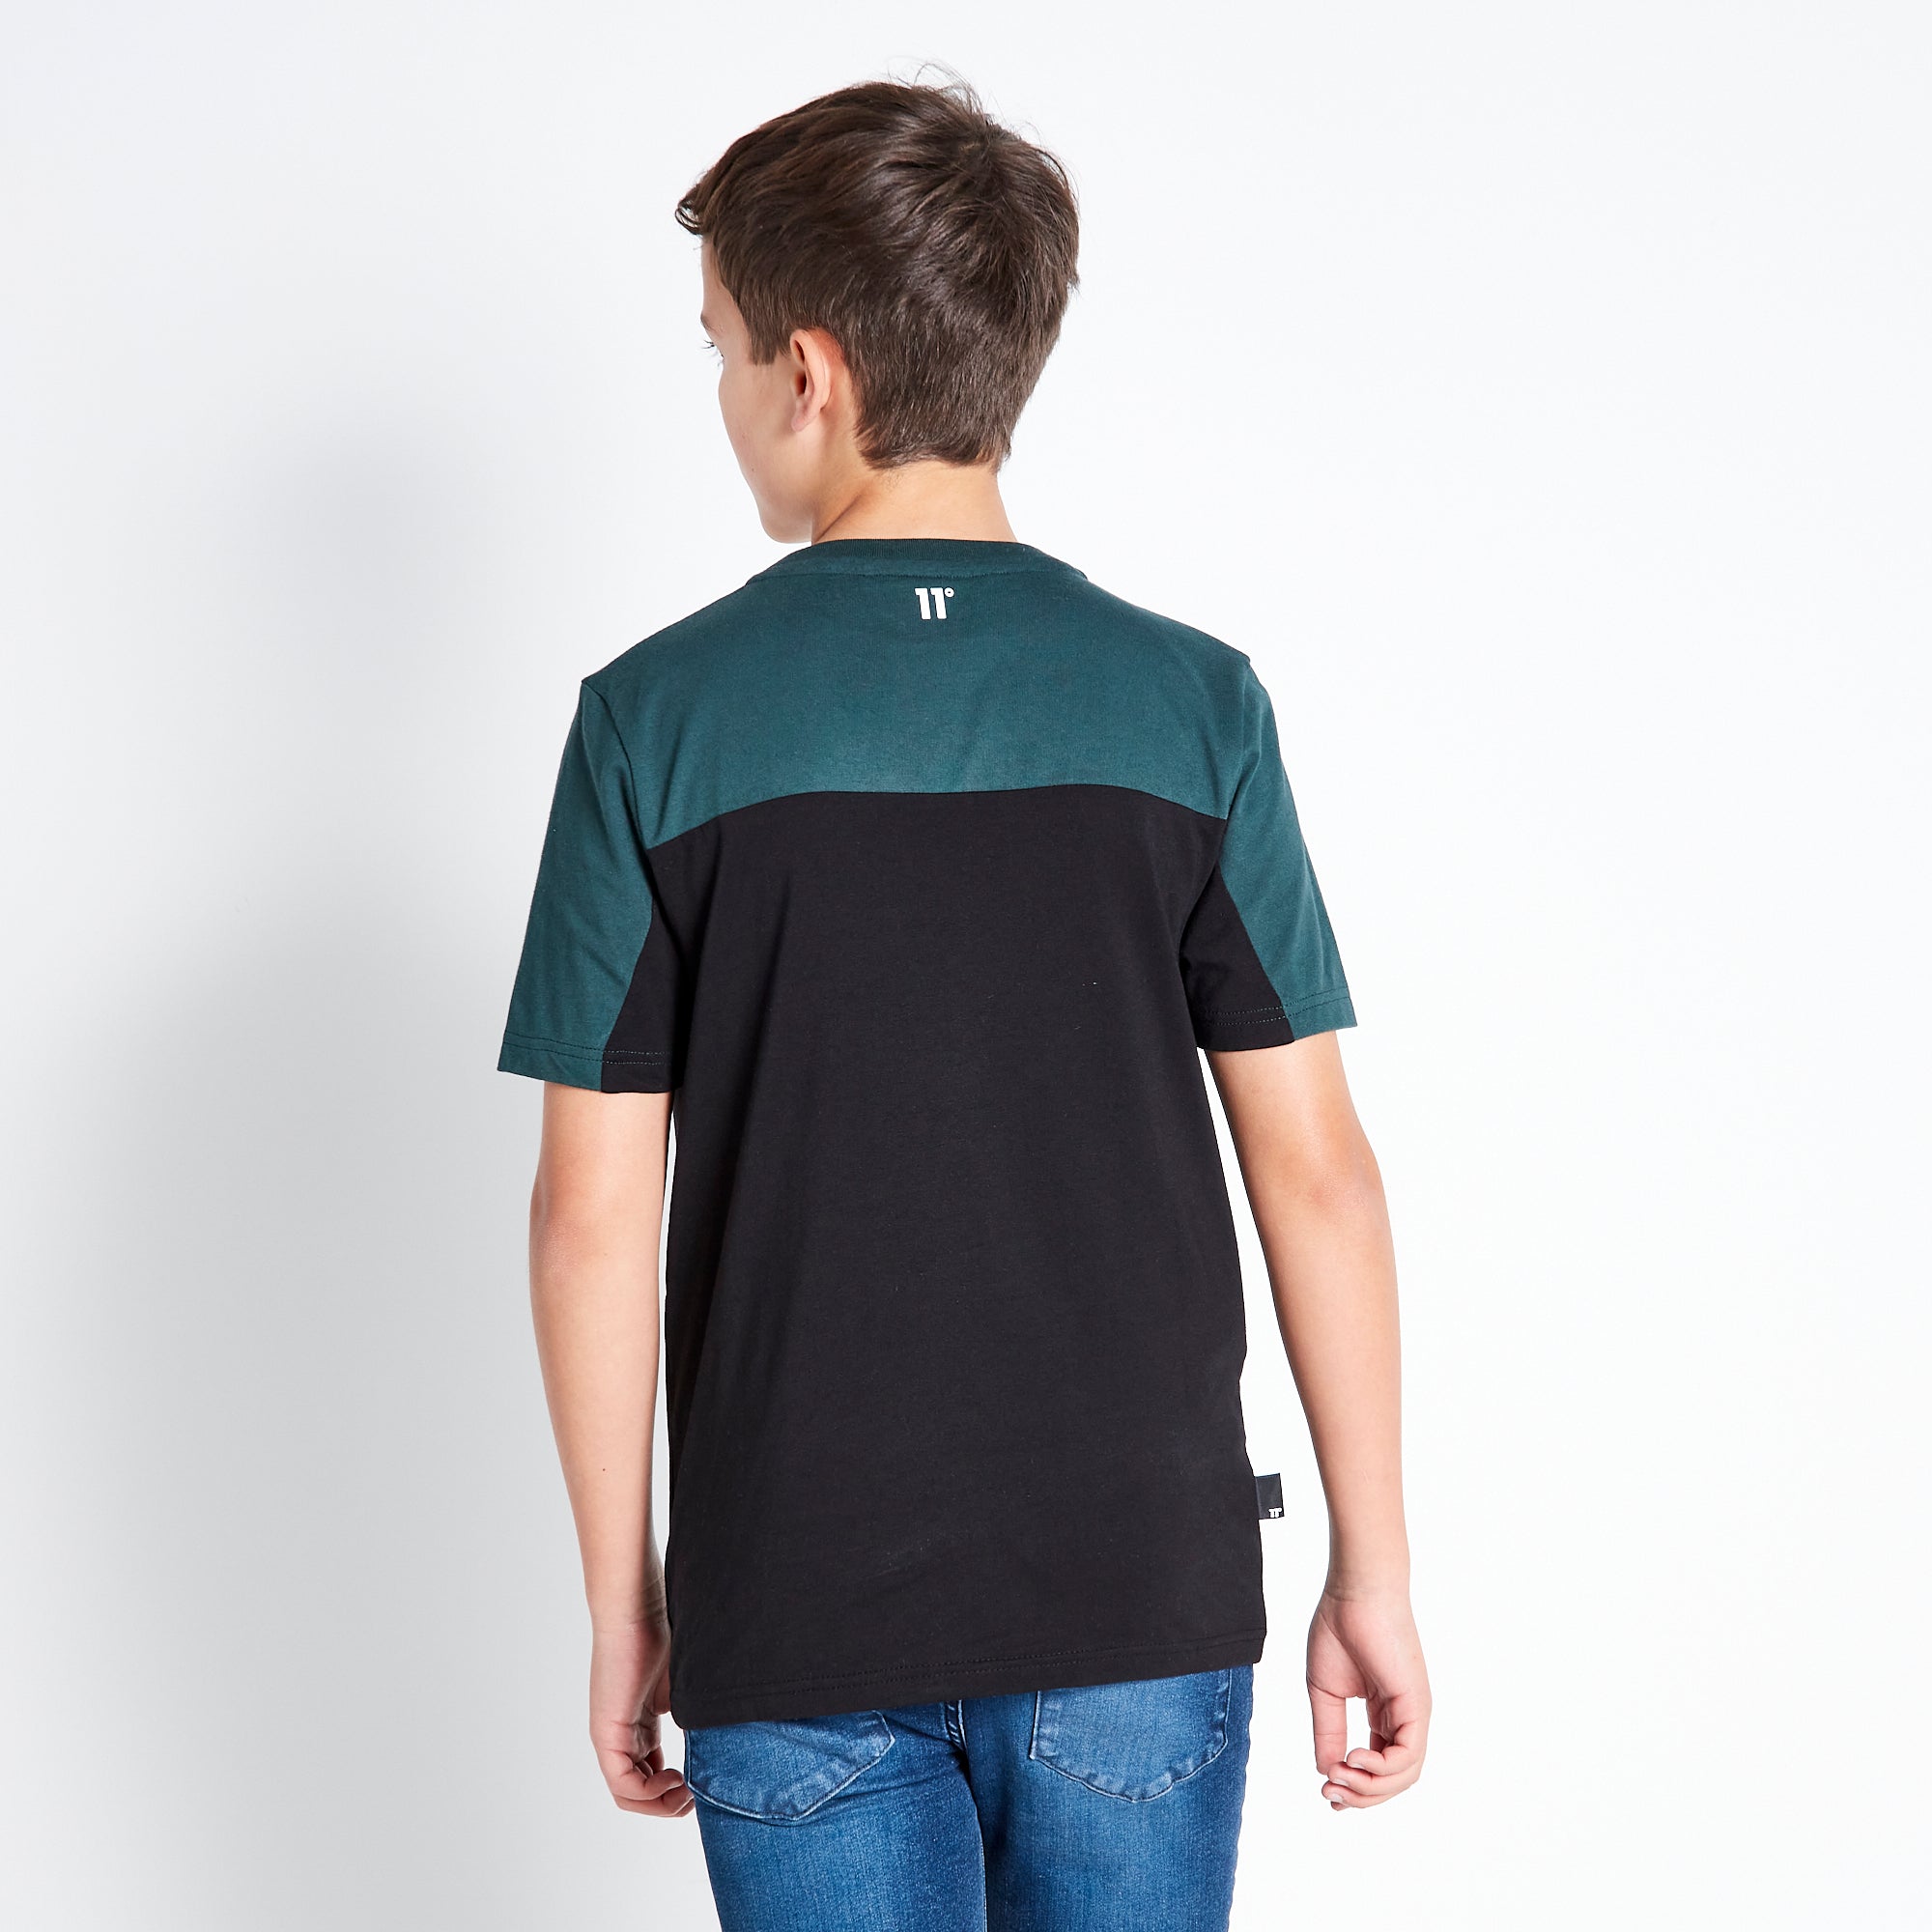 Colour Block Taped Green/Black Boys T-Shirt-Back view